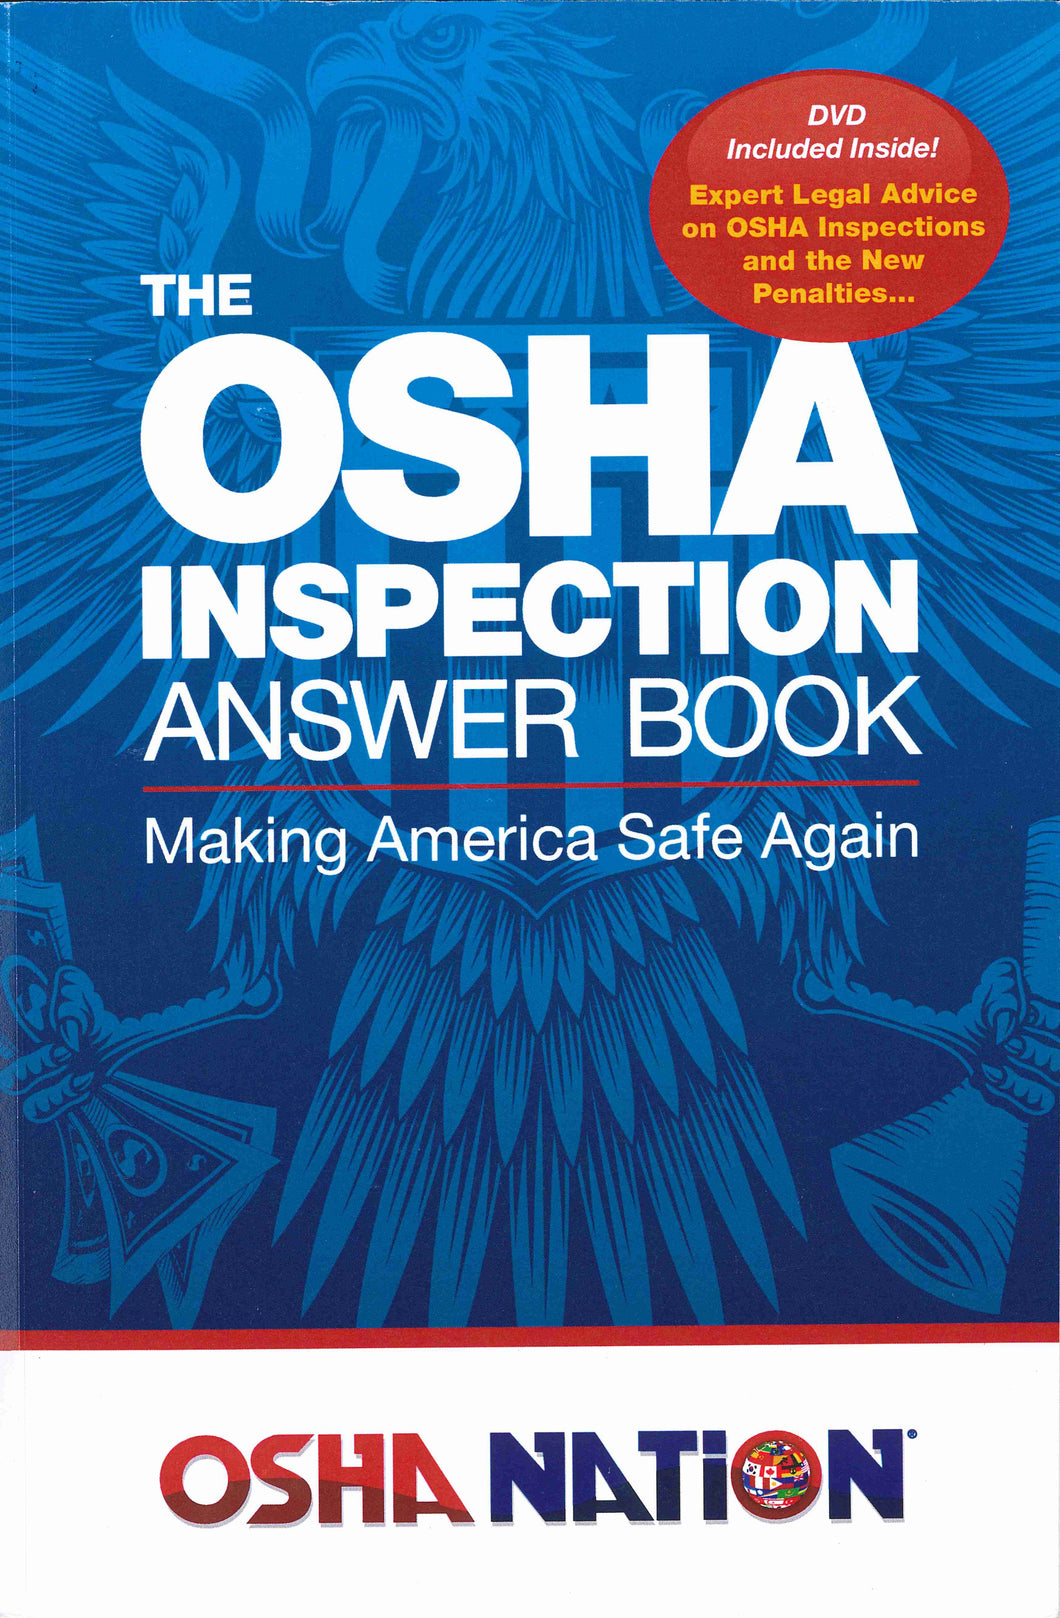 The OSHA Inspection Answer Book by Mark Moran